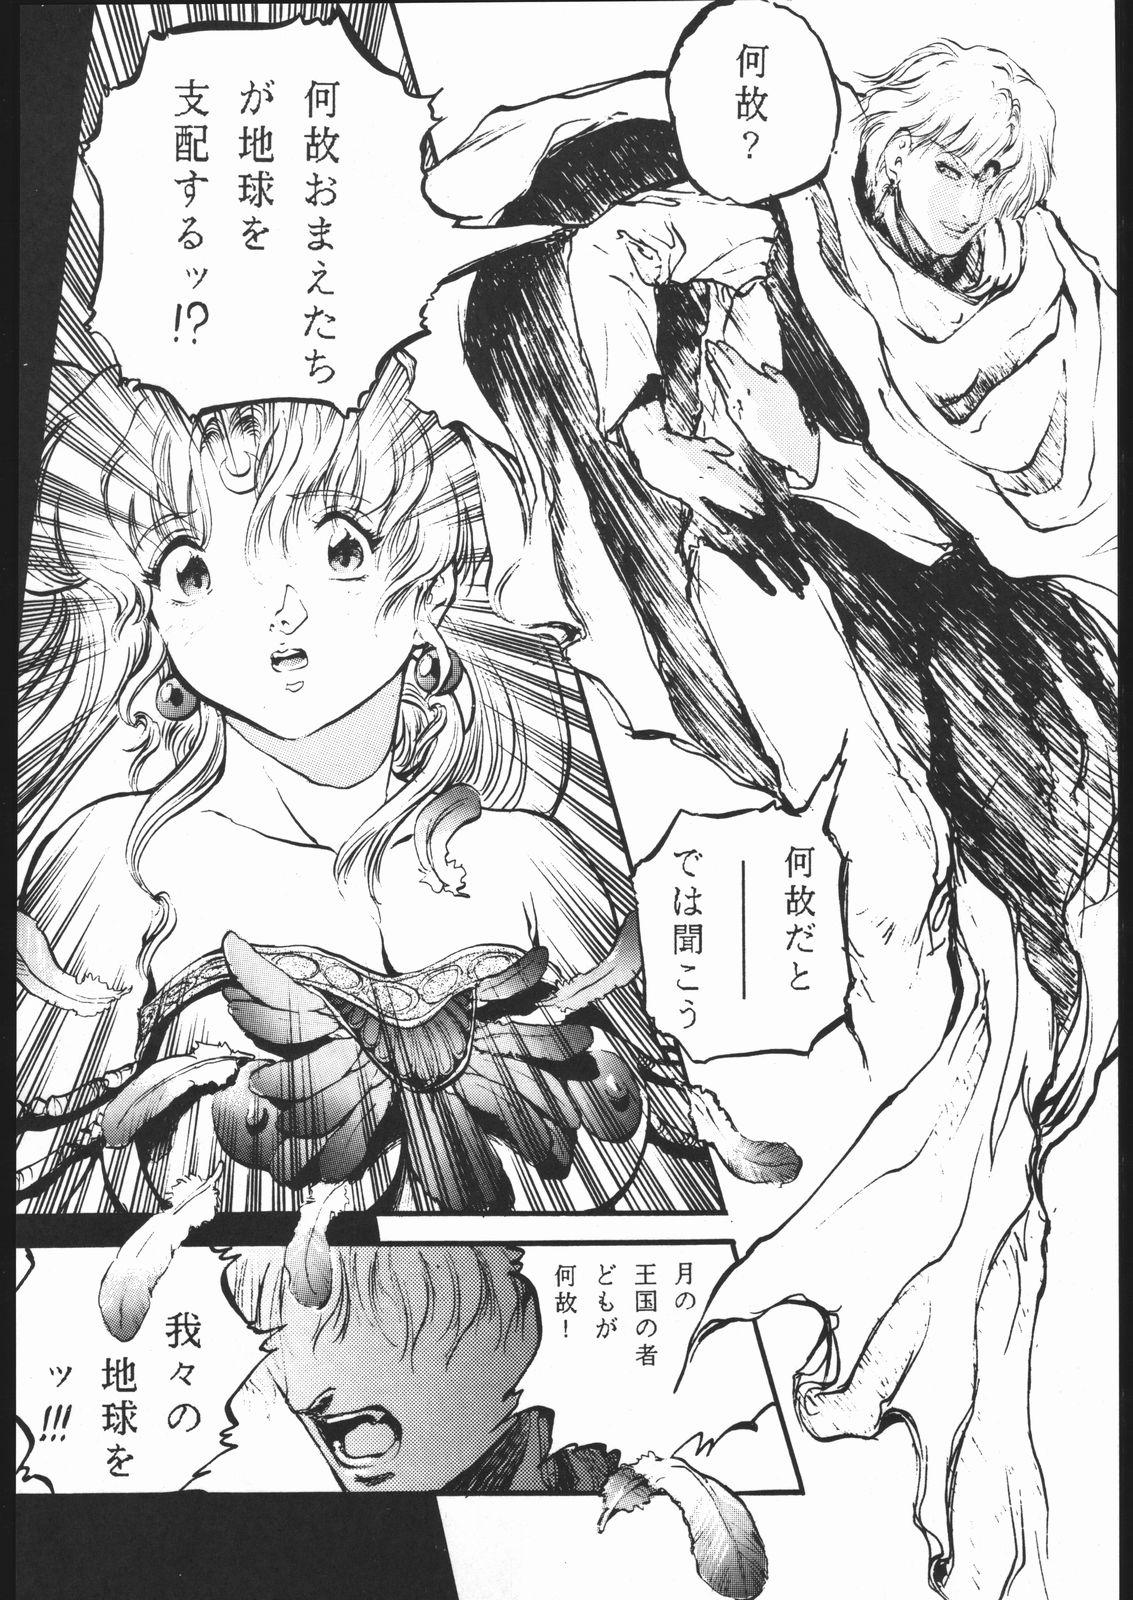 Rebolando KATZE 8 - Sailor moon Tenchi muyo Ghost sweeper mikami Giant robo Victory gundam Tetas - Page 7